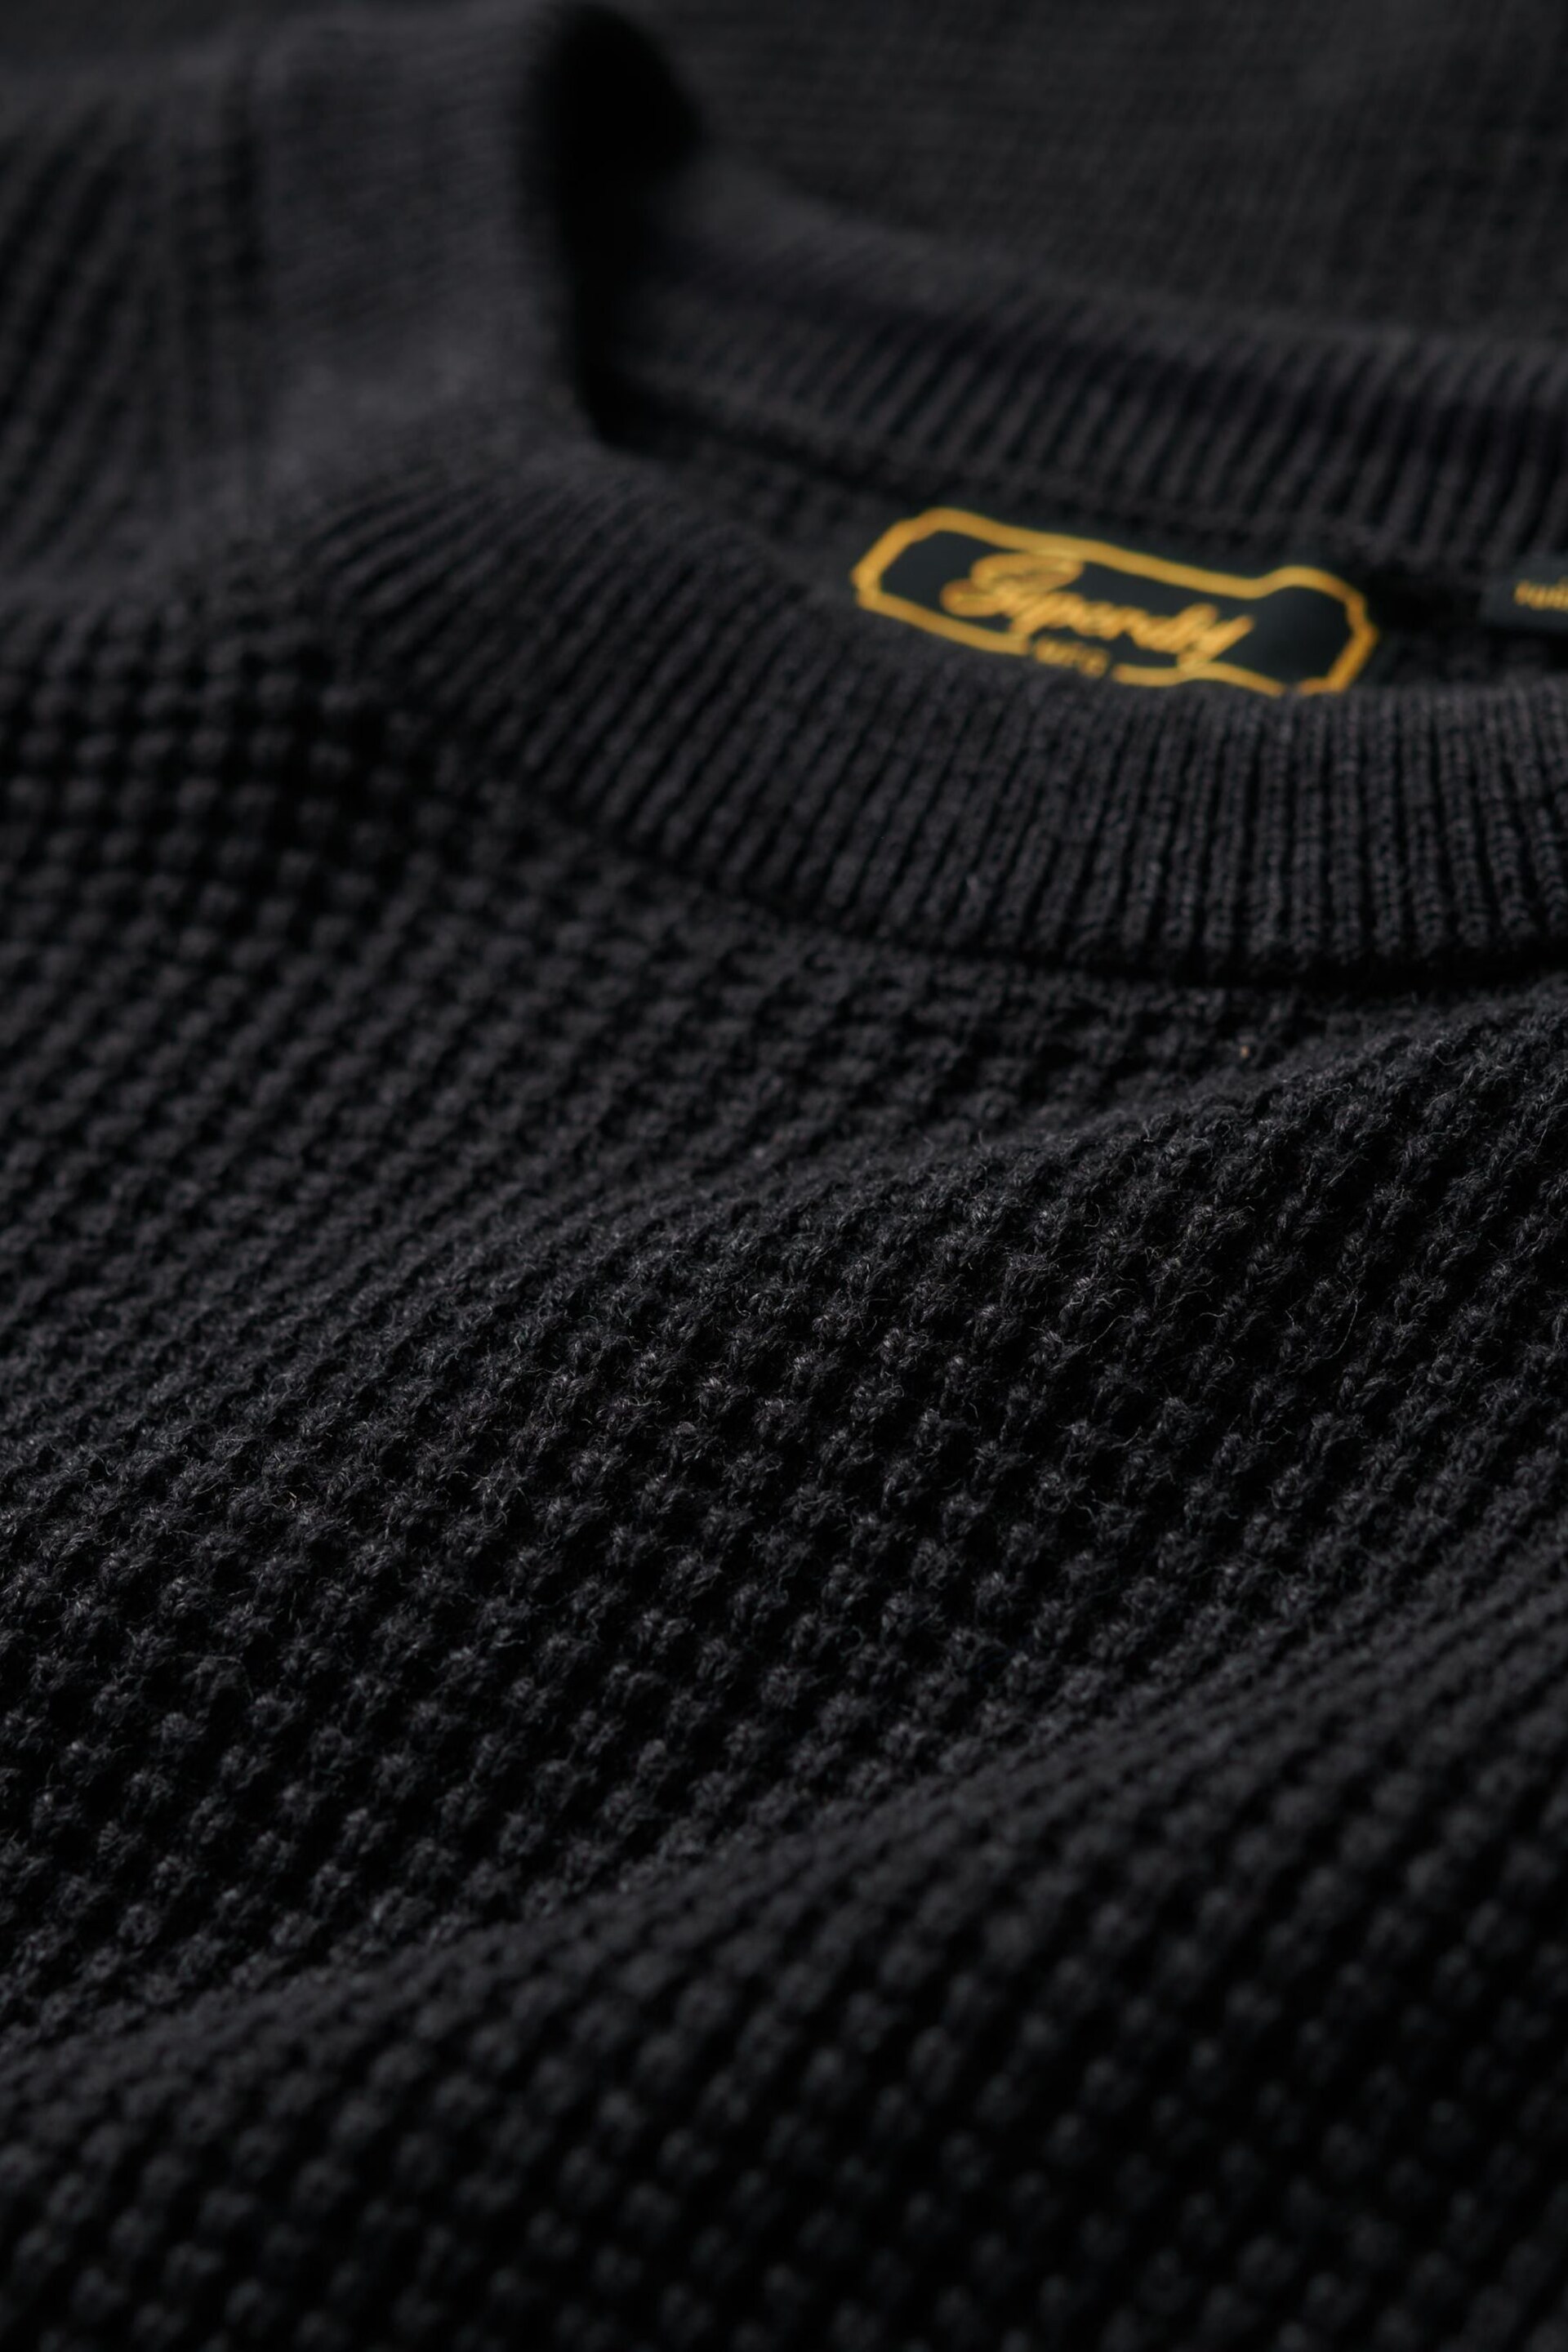 Superdry Black Textured Crew Knit Jumper - Image 5 of 5